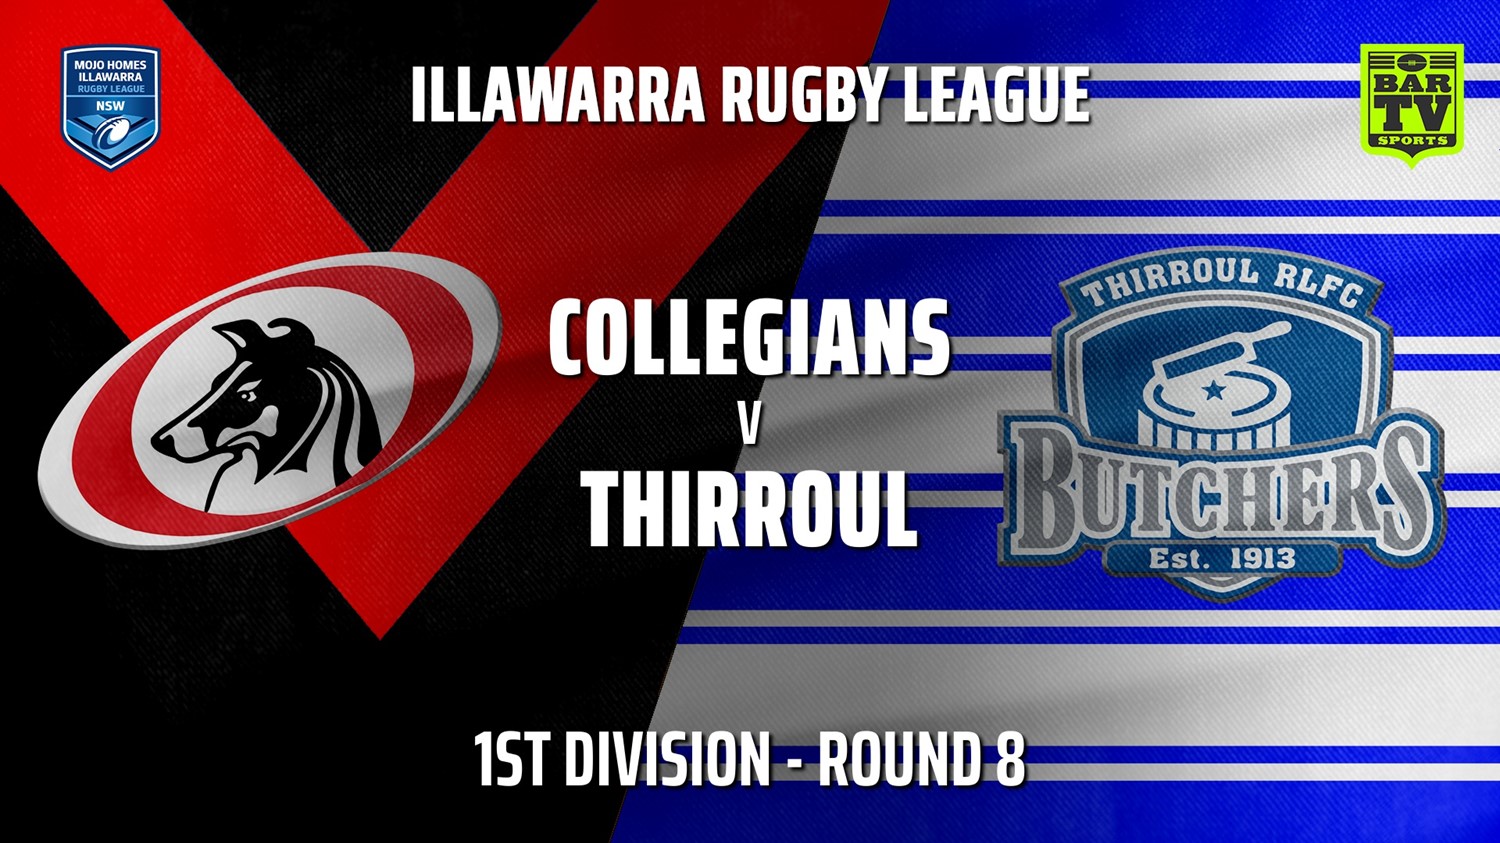 210605-IRL Round 8 - 1st Division - Collegians v Thirroul Butchers Slate Image